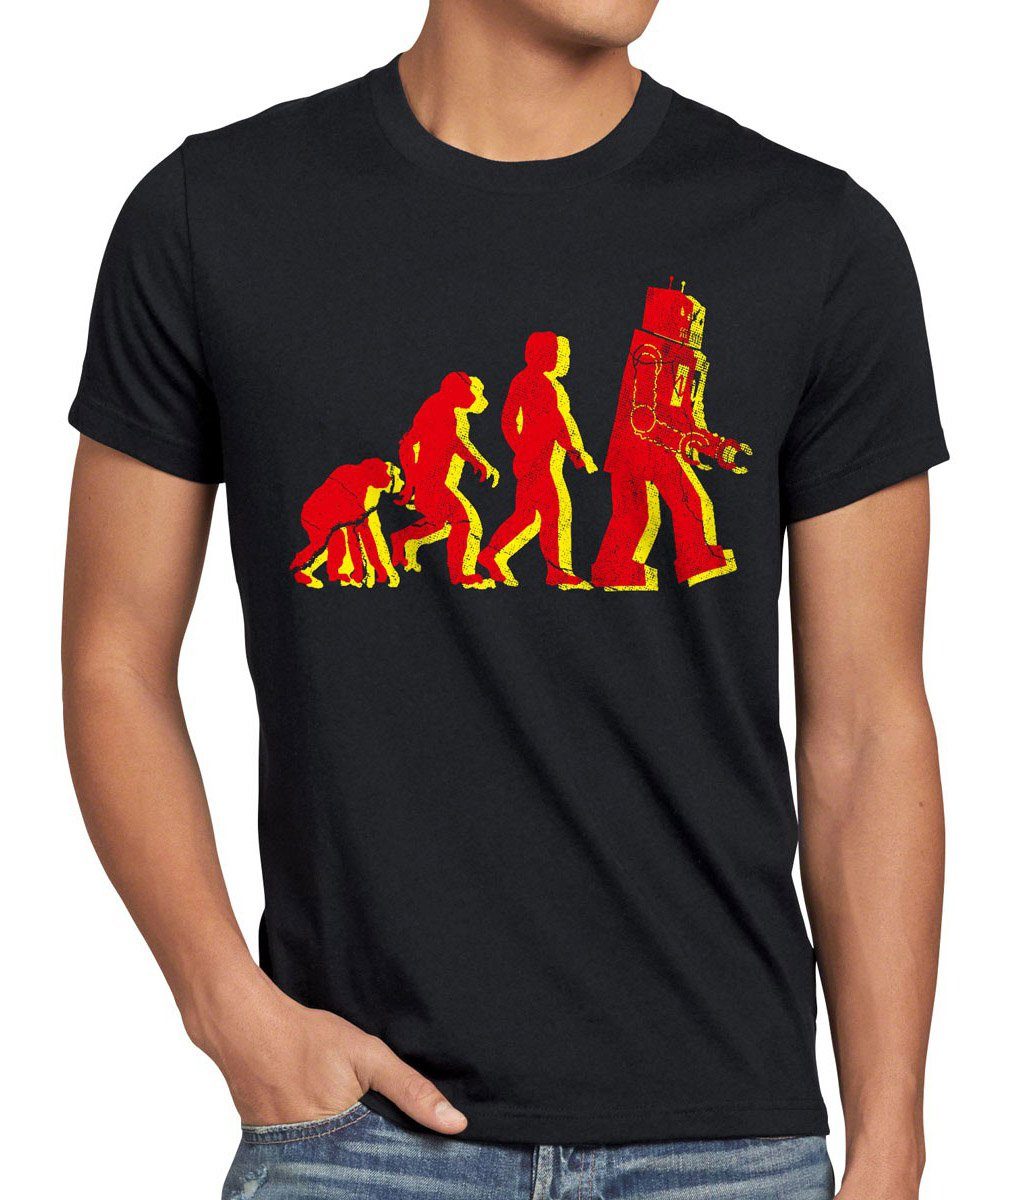 style3 Print-Shirt Herren T-Shirt Evolution big bang roboter sheldon theory cooper darwin neu robot schwarz | T-Shirts